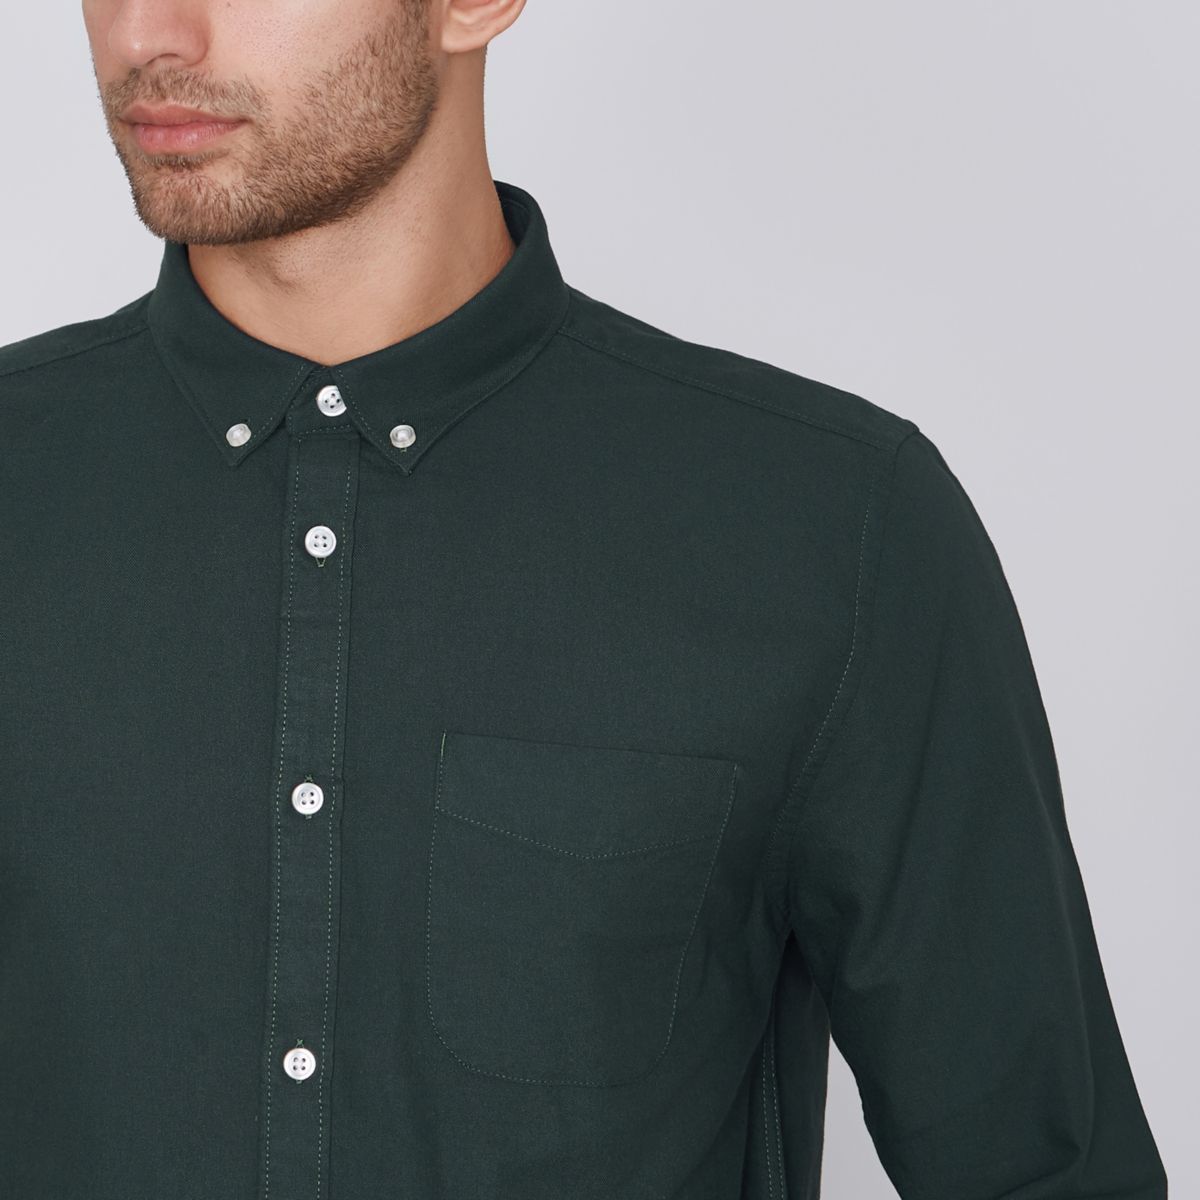 Green long sleeve oxford shirt - Shirts - Sale - men